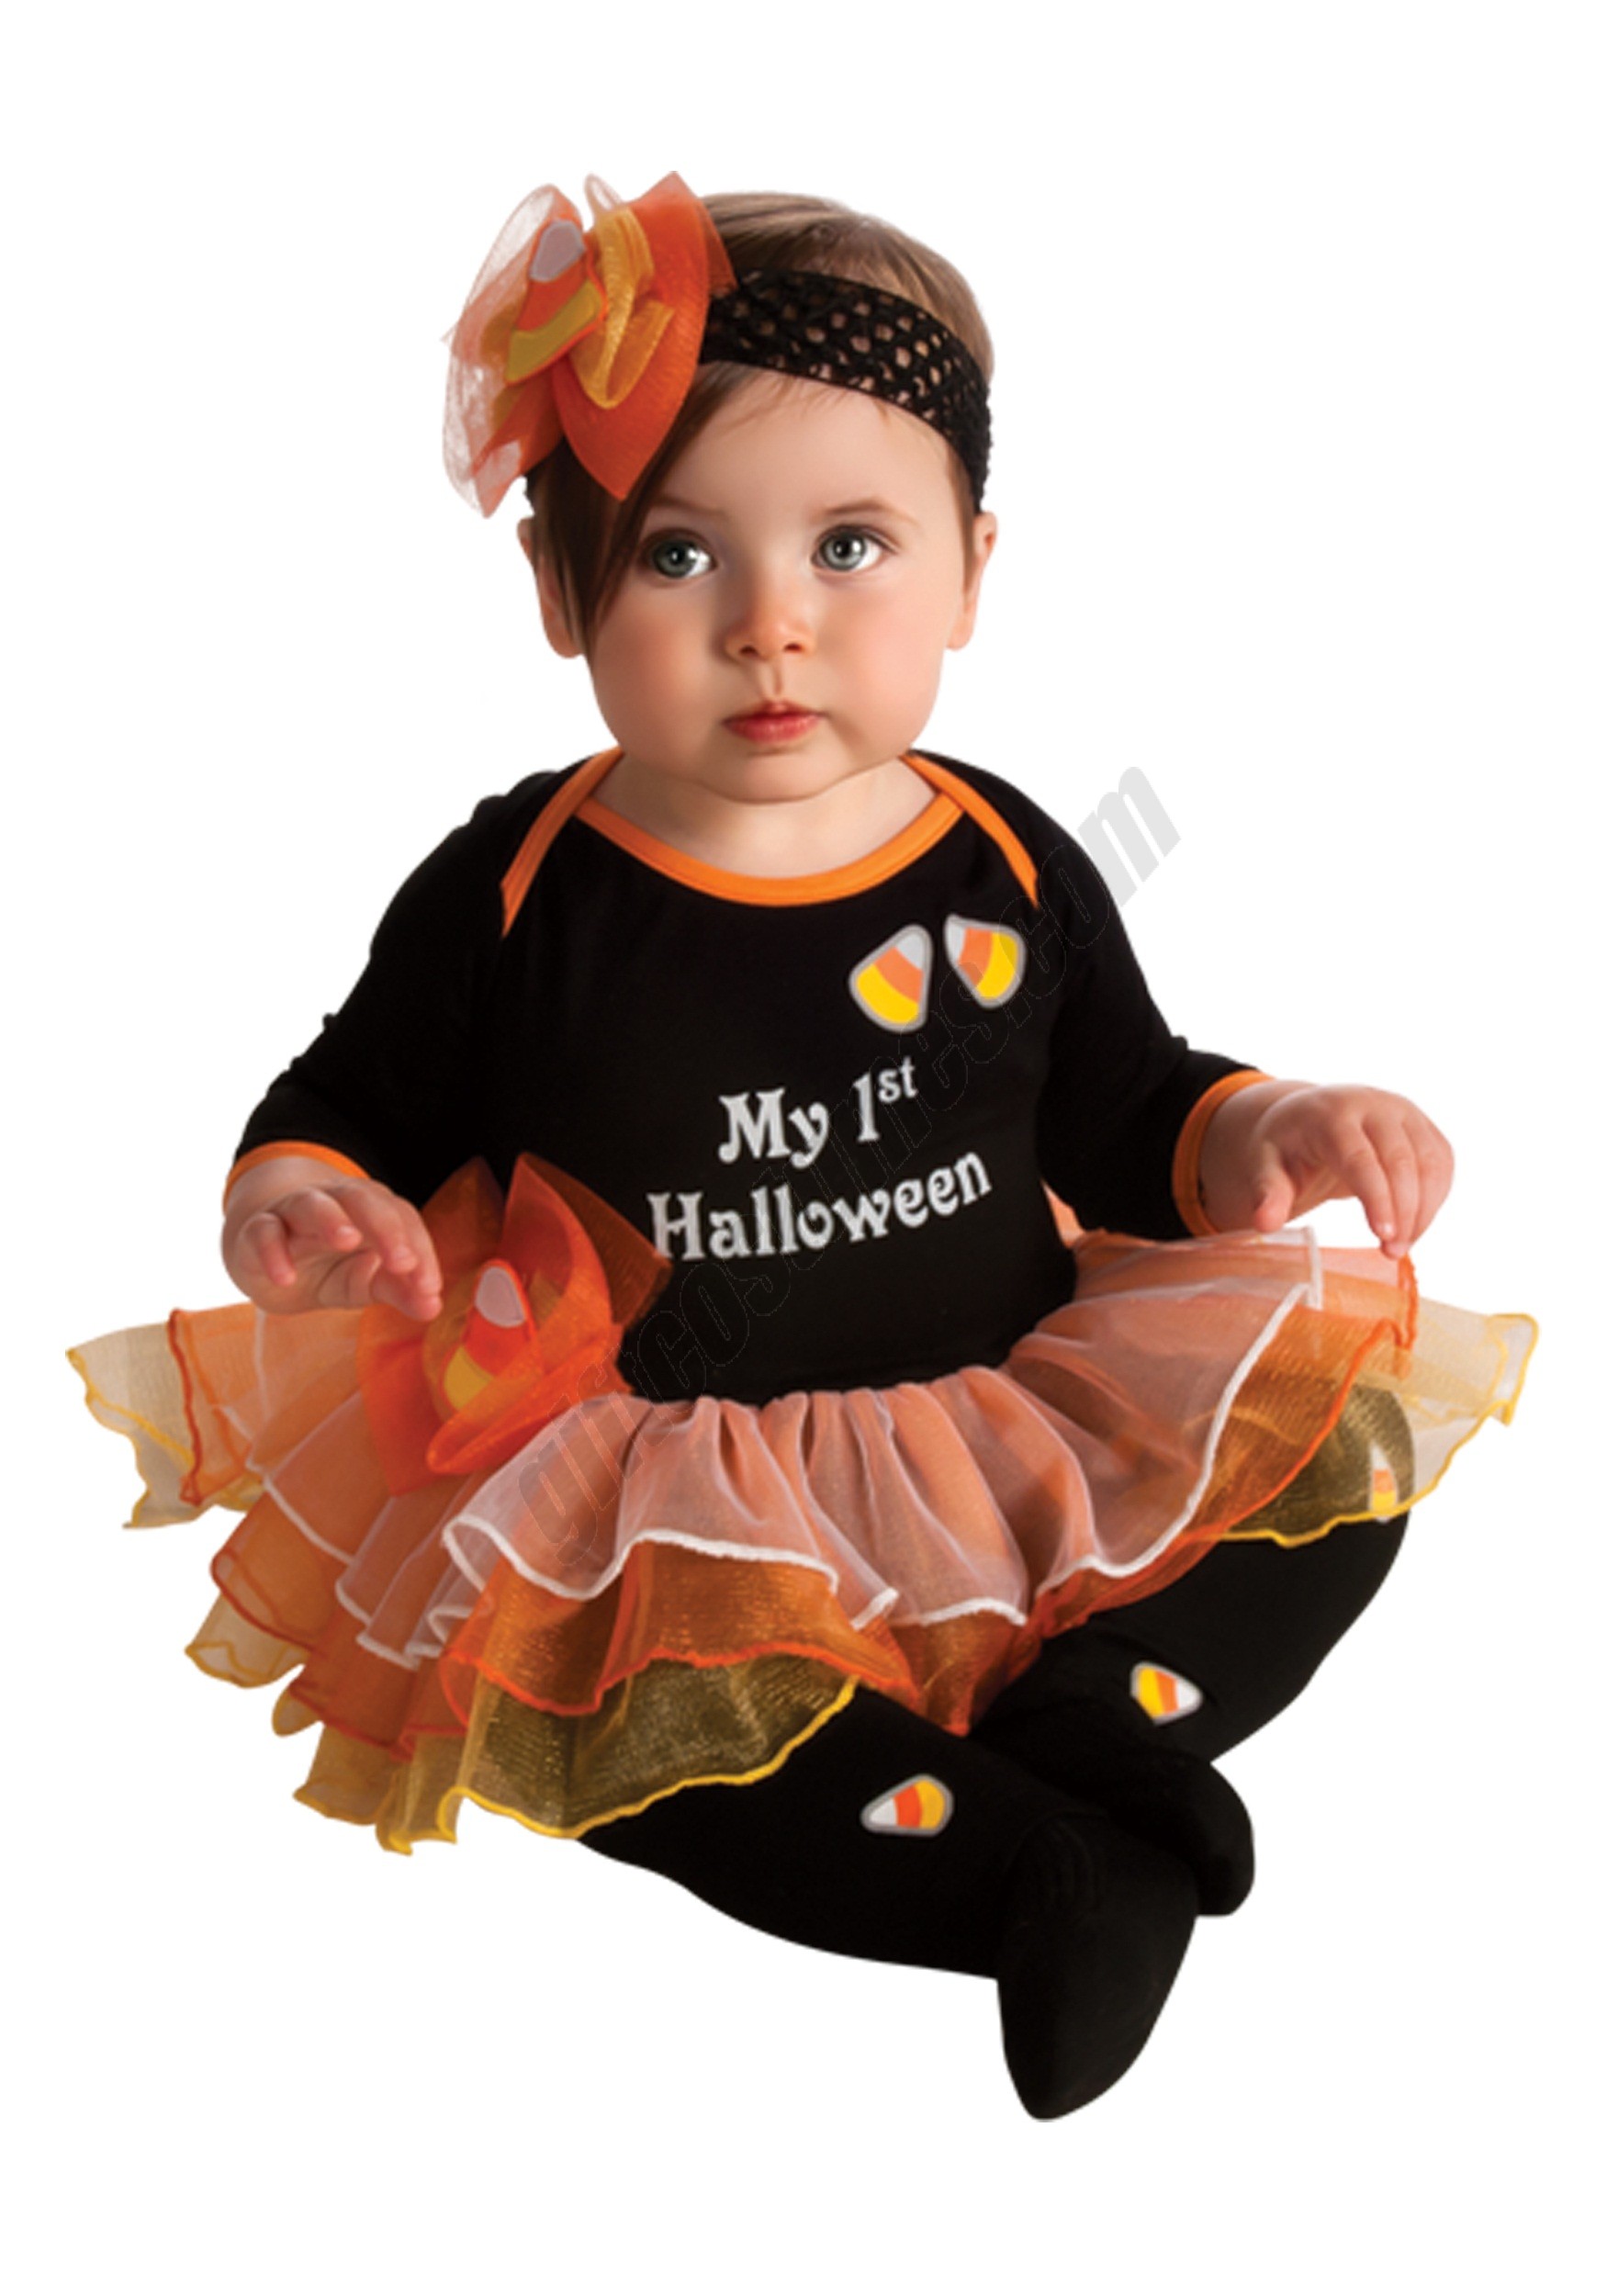 Infant My First Halloween Onesie Costume Promotions - Infant My First Halloween Onesie Costume Promotions